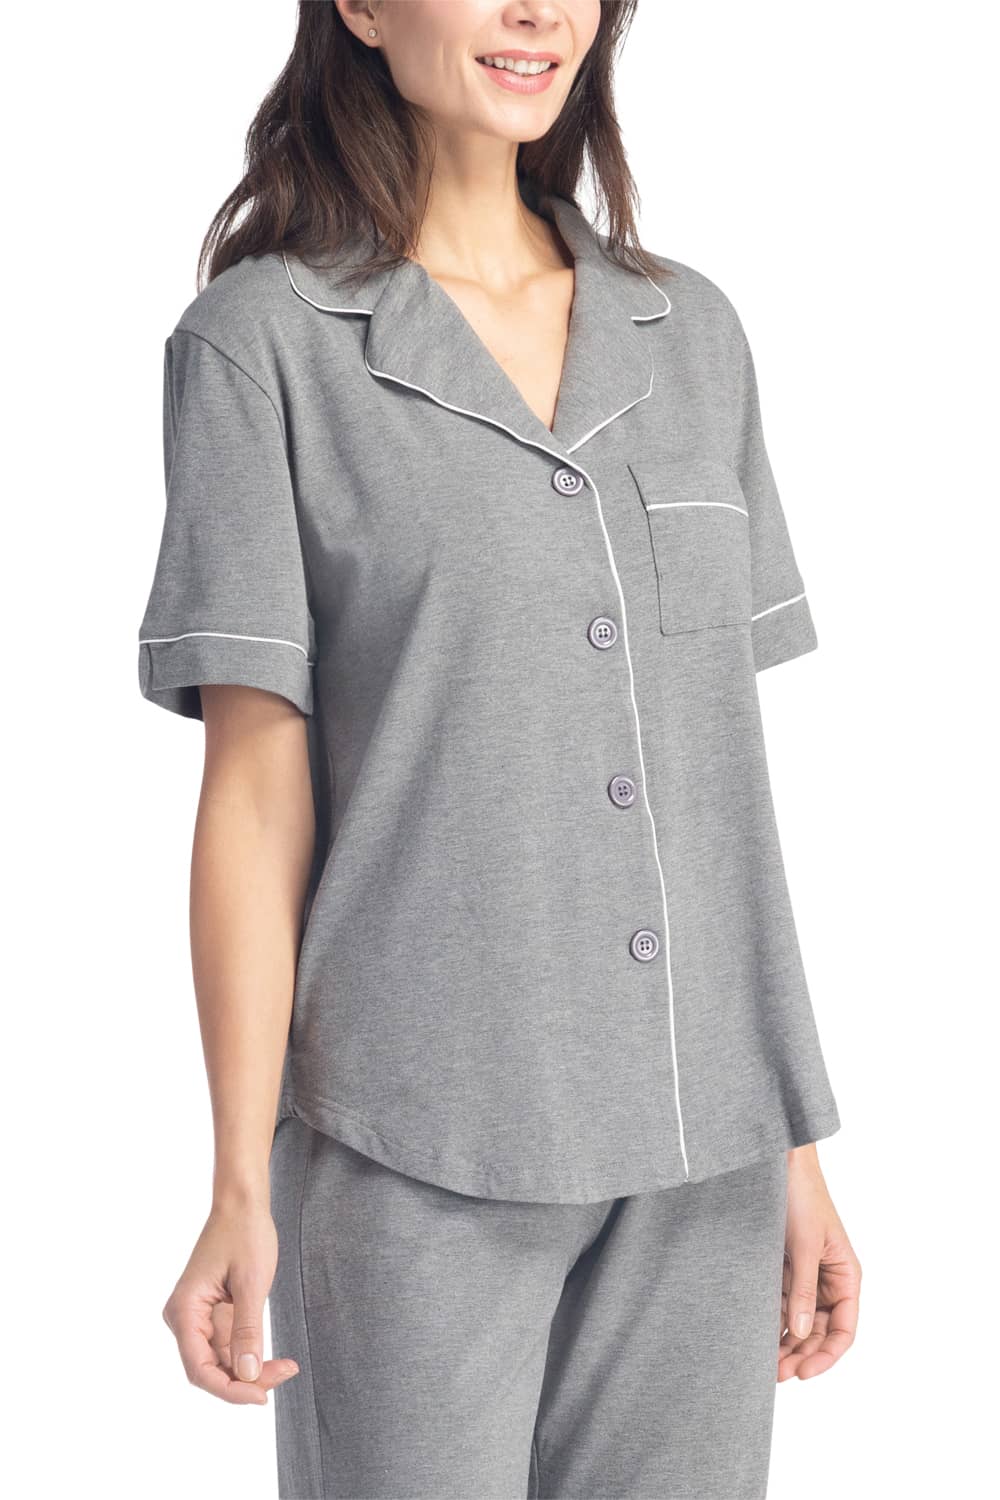 Just Love 100% Cotton Capri Sets Women Sleepwear Womans Pajamas Pjs (Need  to Sleep - White, Medium)